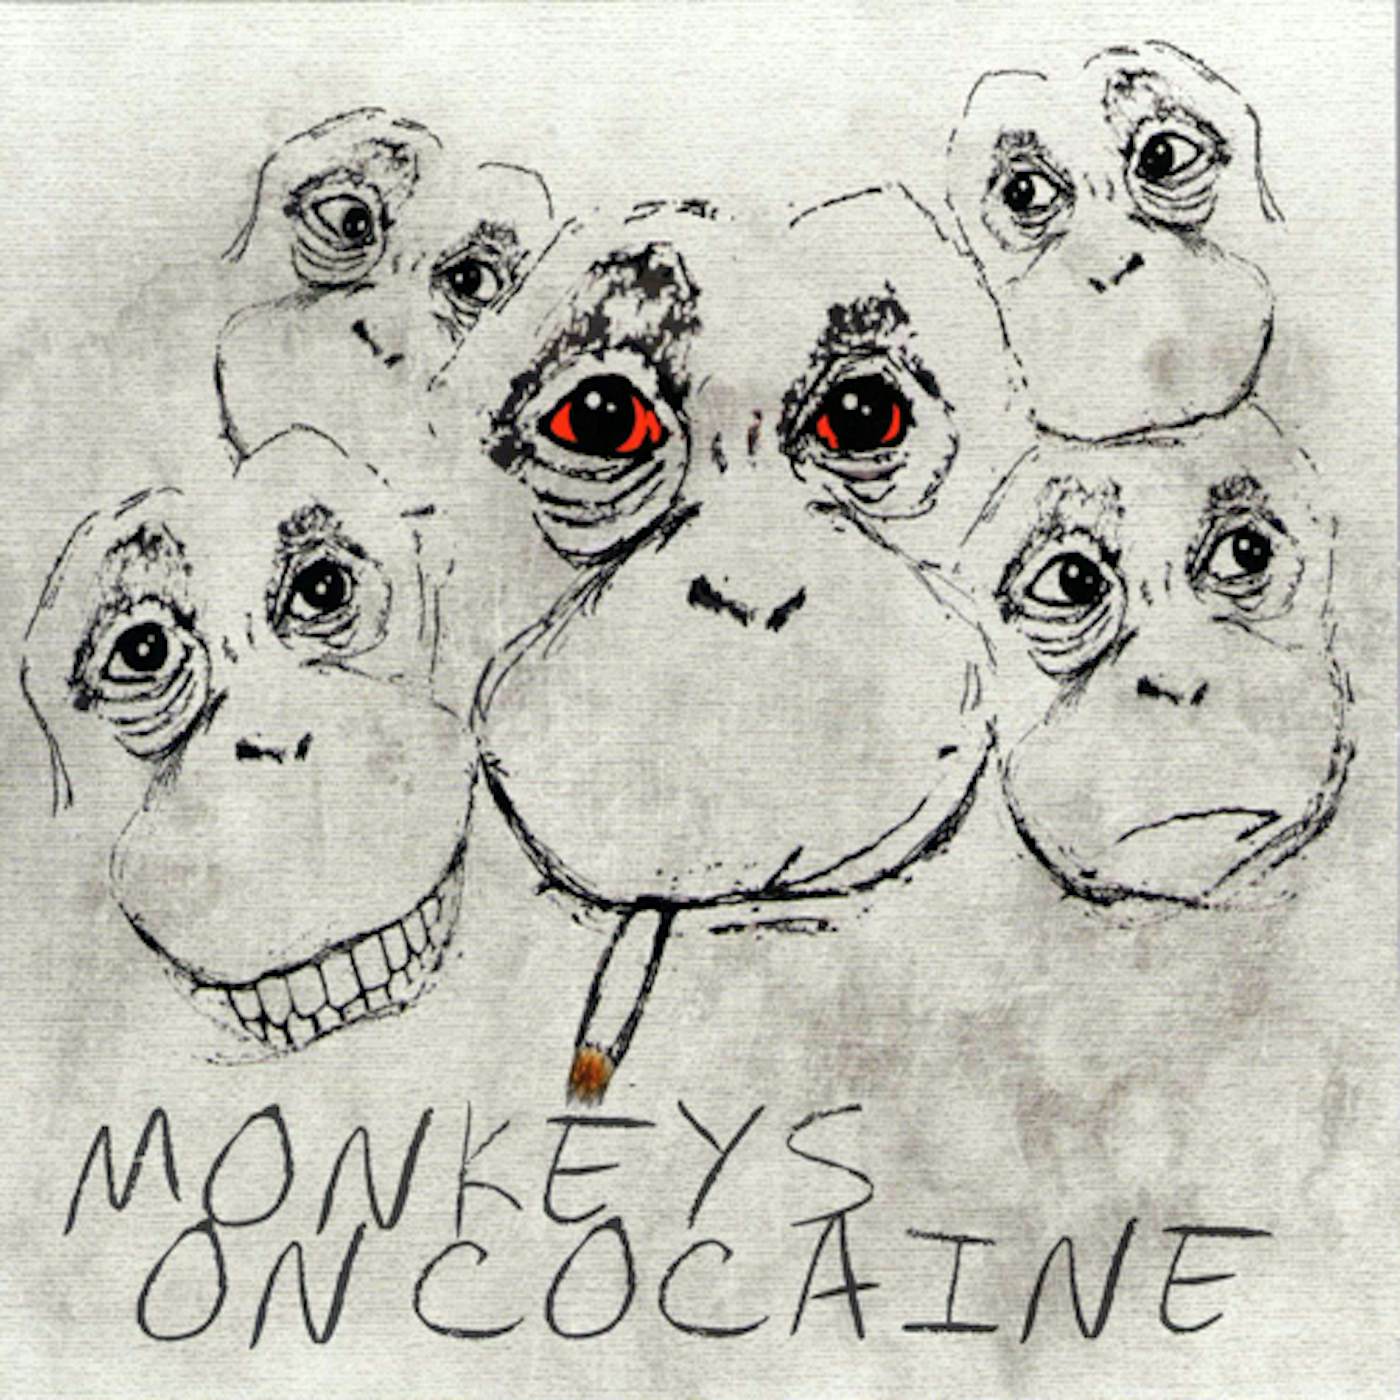 Augie Meyers MONKEYS ON COCAINE CD